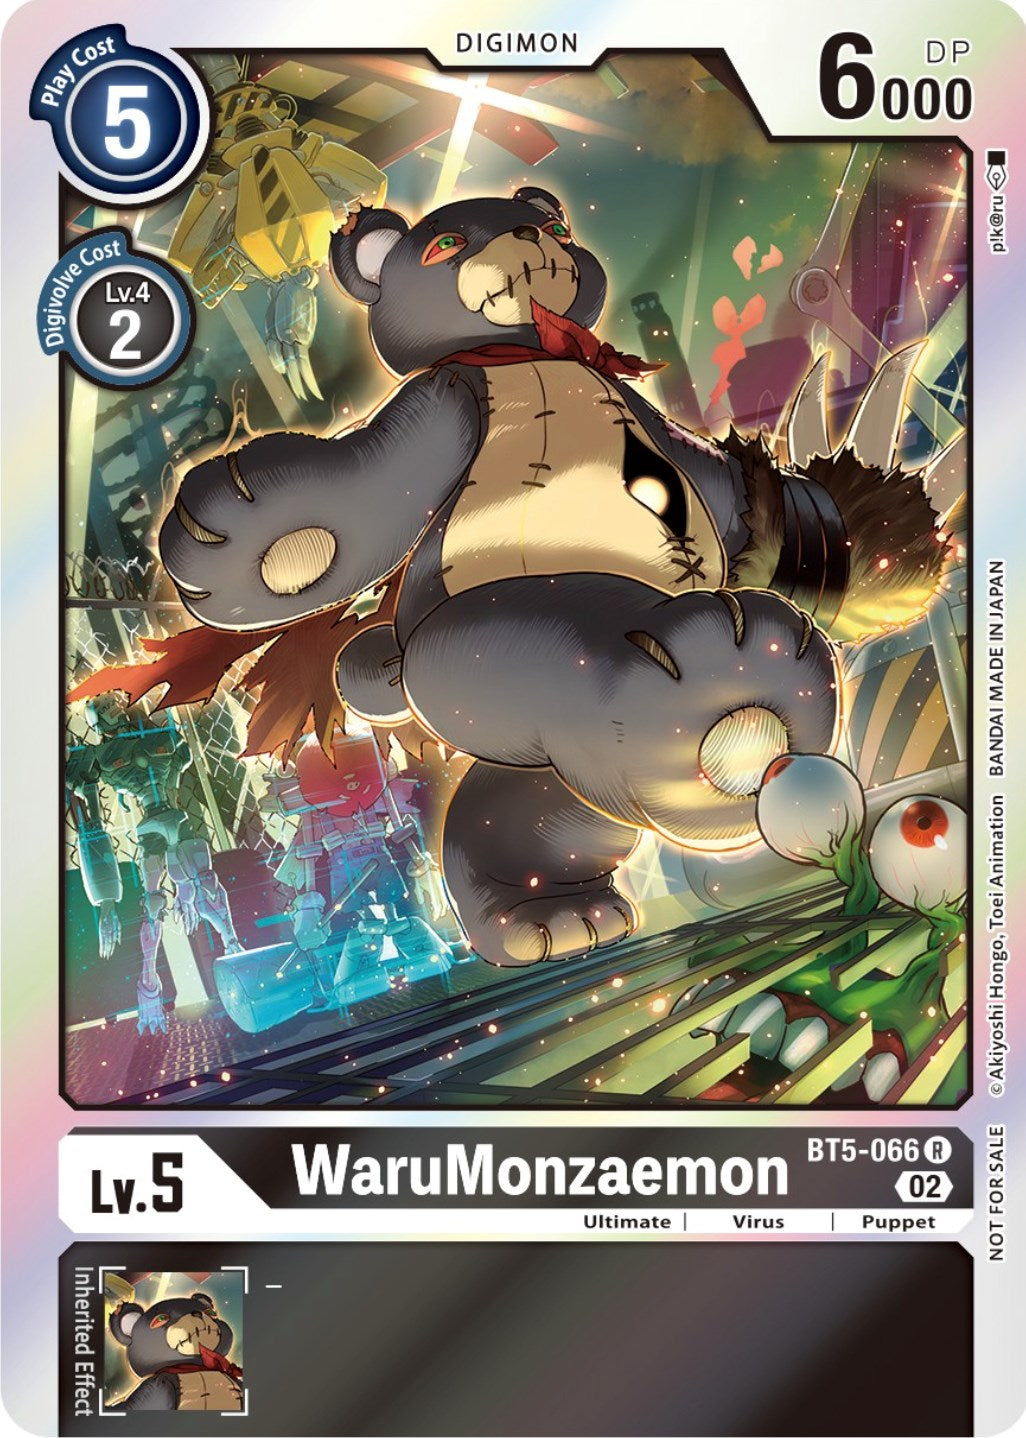 WaruMonzaemon [BT5-066] (Official Tournament Pack Vol. 7) [Battle of Omni Promos] | Shuffle n Cut Hobbies & Games